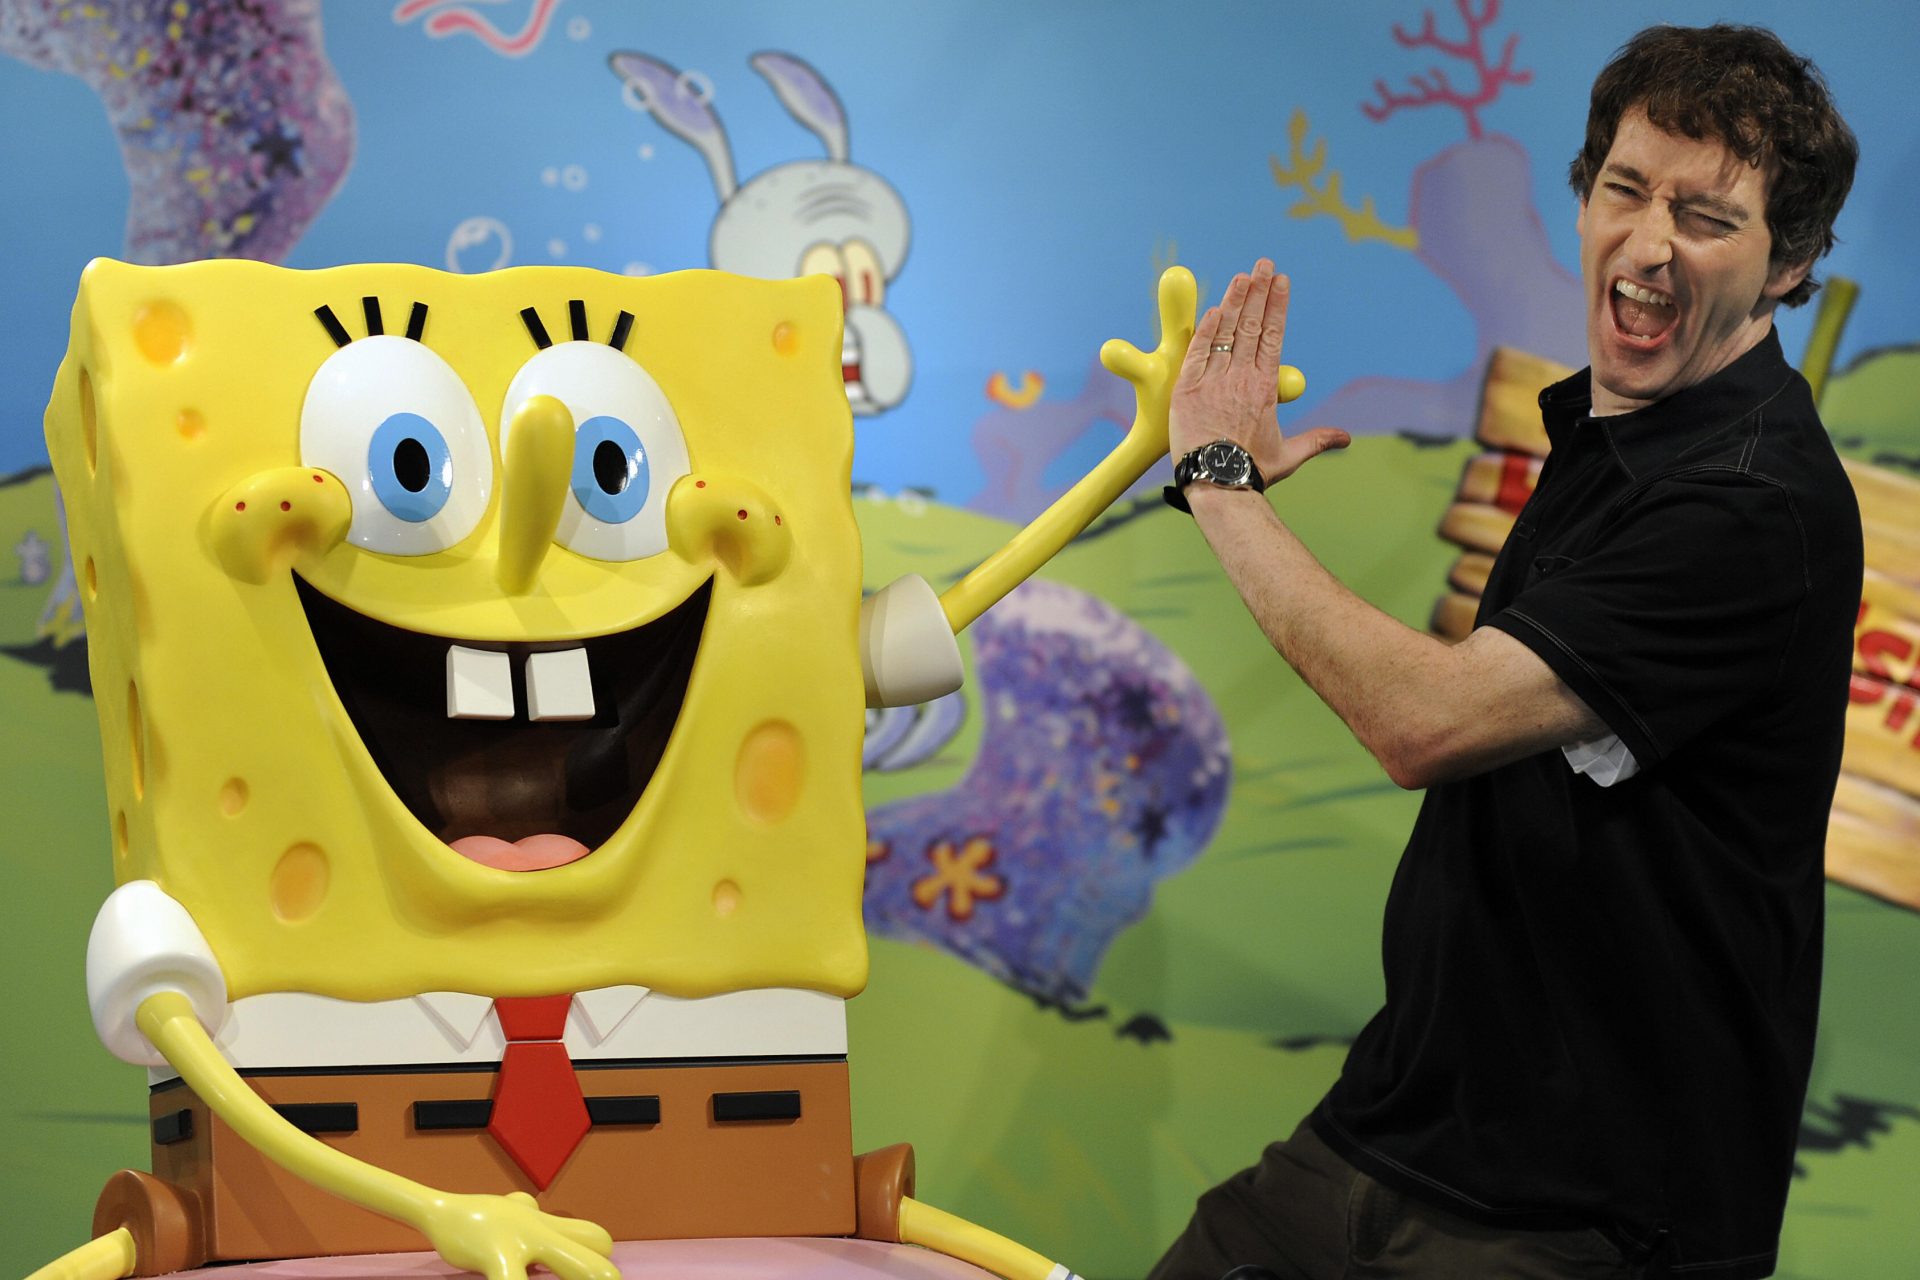 SpongeBob SquarePants is autistic, his voice actor claims